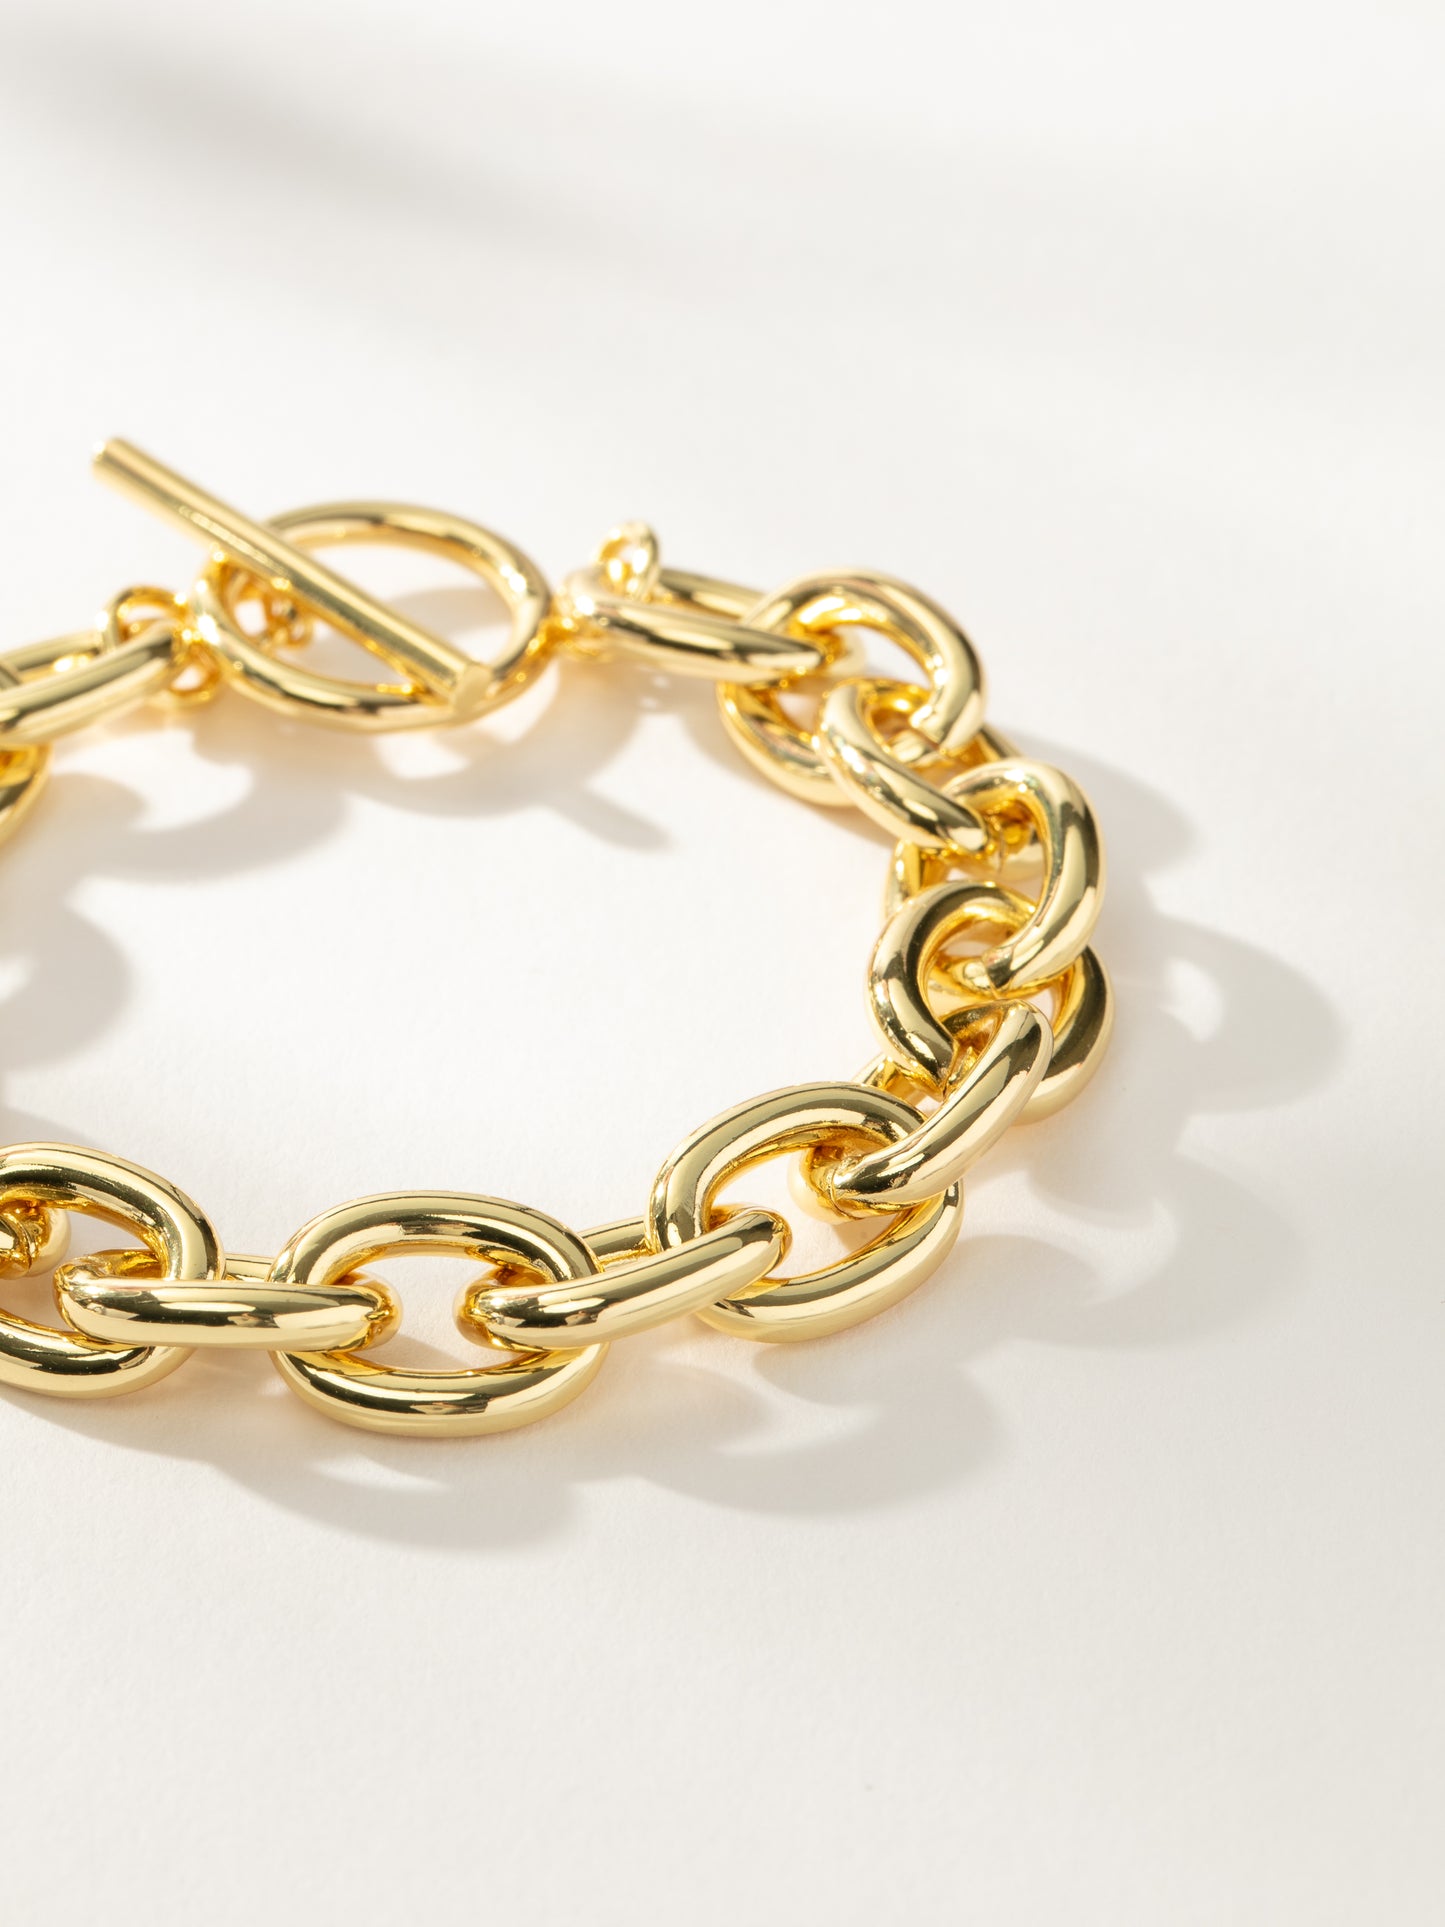 Dramatic Chain Bracelet | Gold | Product Detail Image | Uncommon James